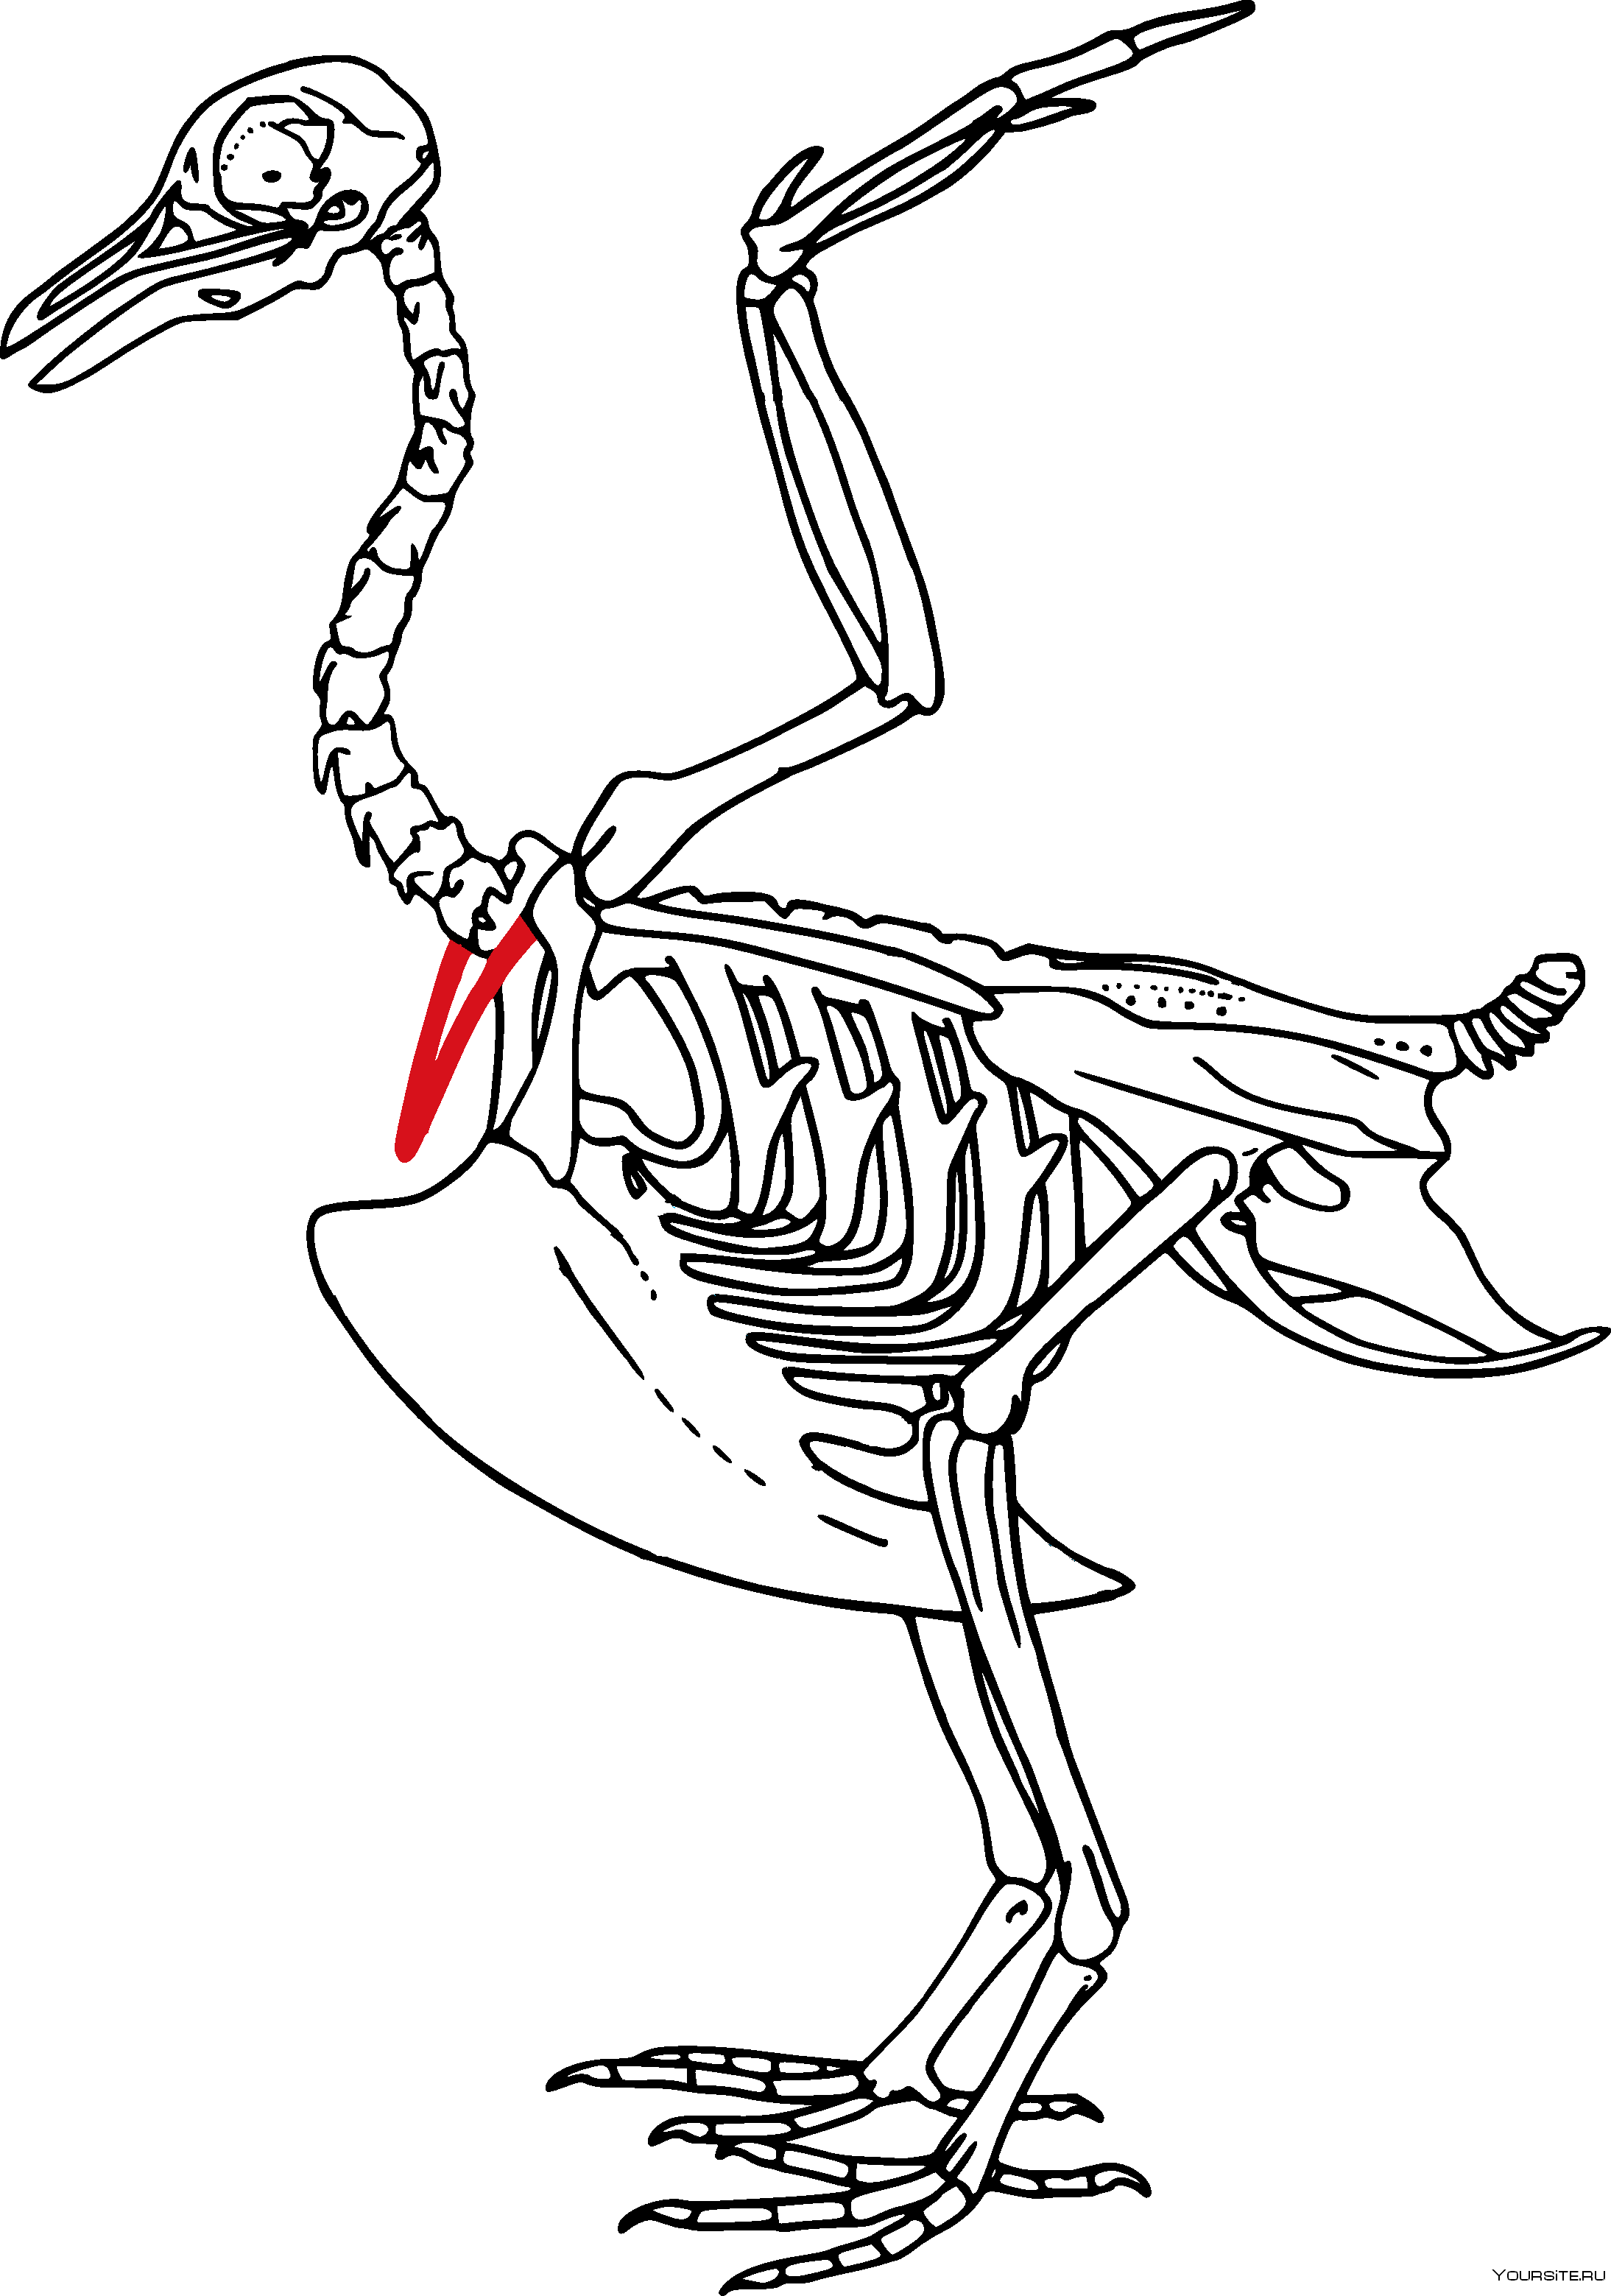 Вилочка у птиц это. Энанциорнис скелет. Скелет птицы пигостиль. Скелет птицы курицы. Скелет птицы вилочка.